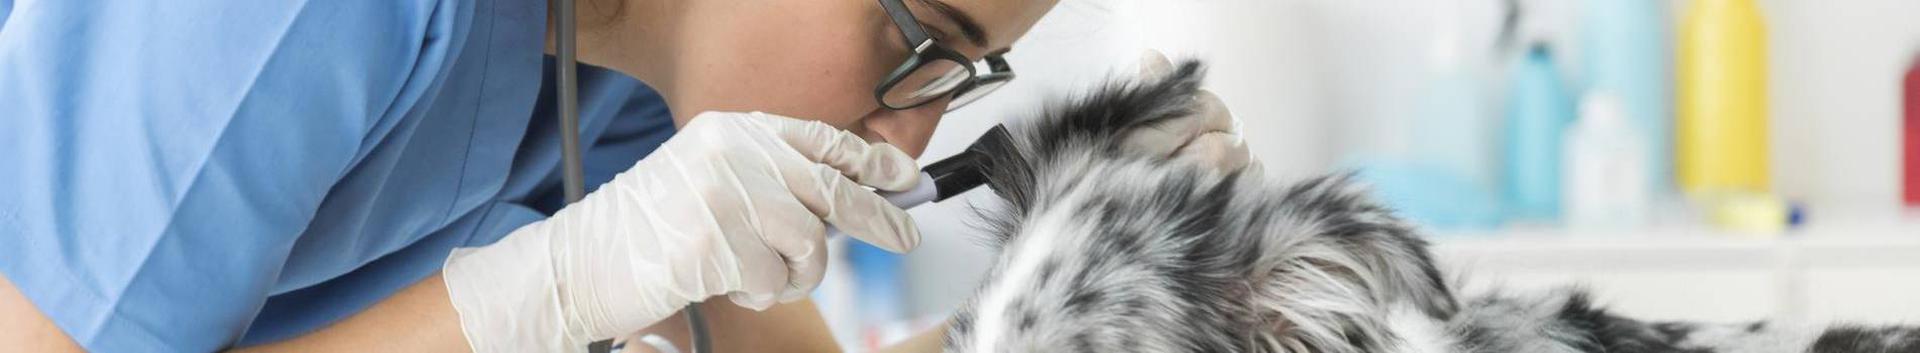 Veterinarians and Clinics, Veterinary and Animal Clinics, Animal Clinics